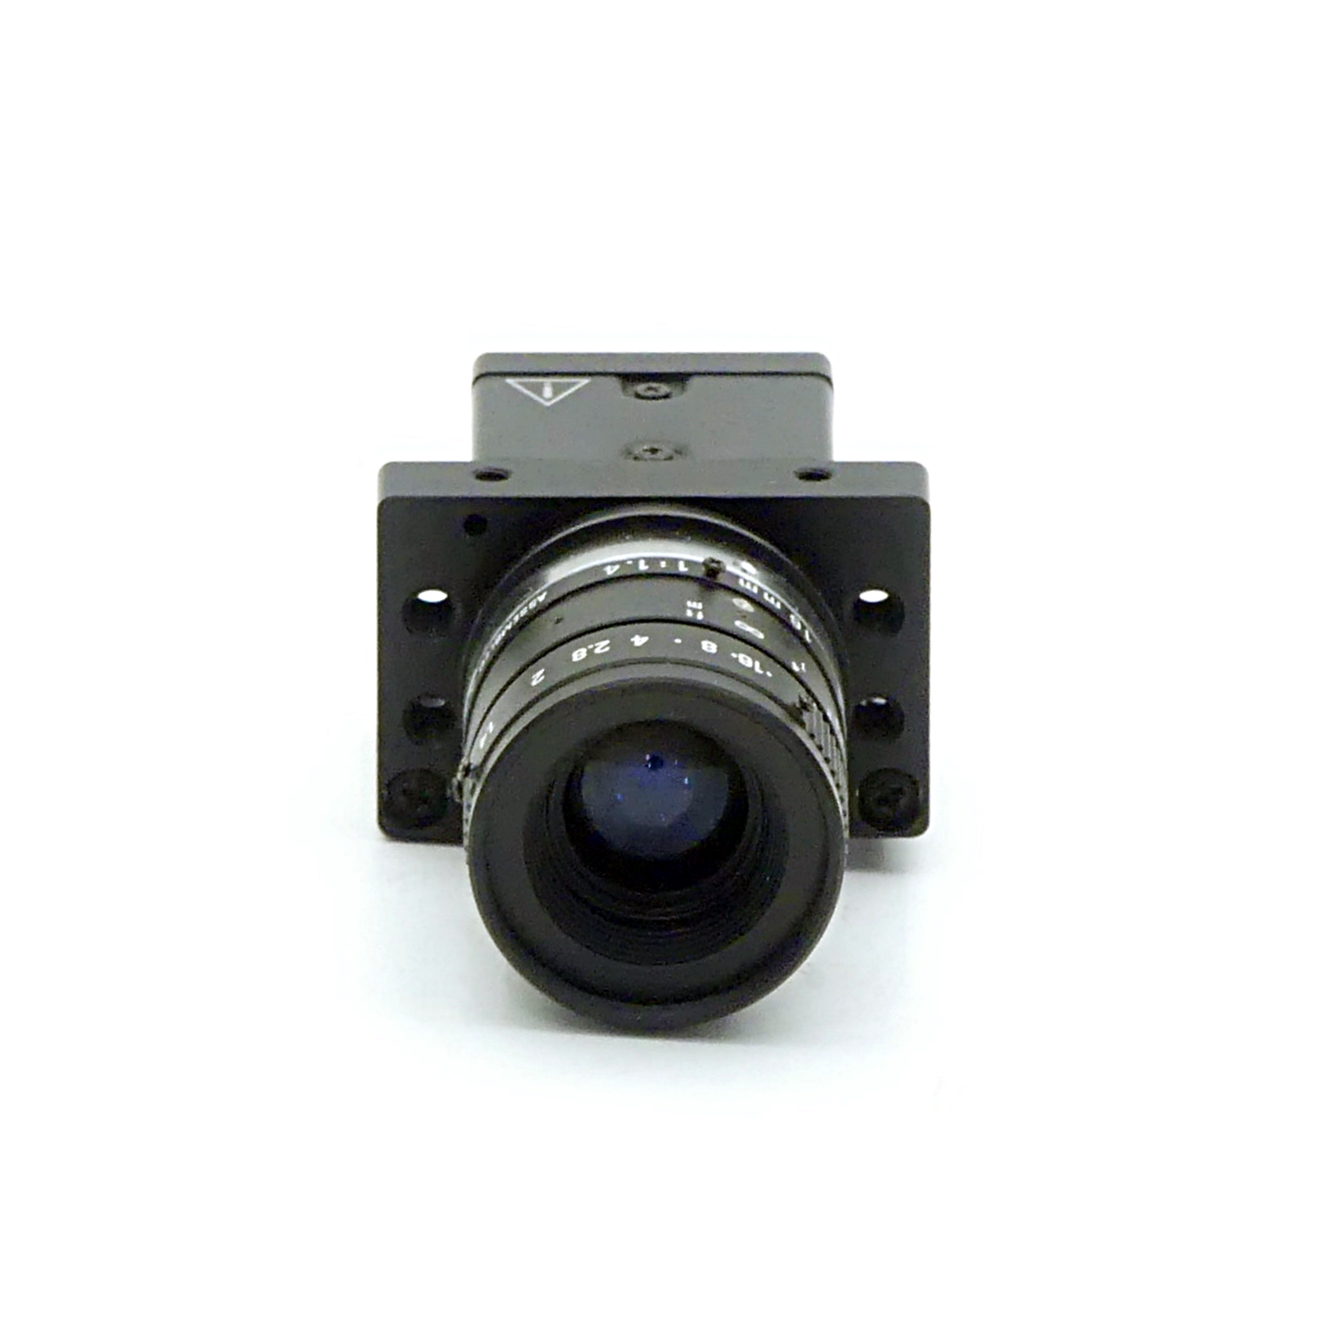 Single-colour camera XC-ES50 with Pentax TV Lens 16 mm 